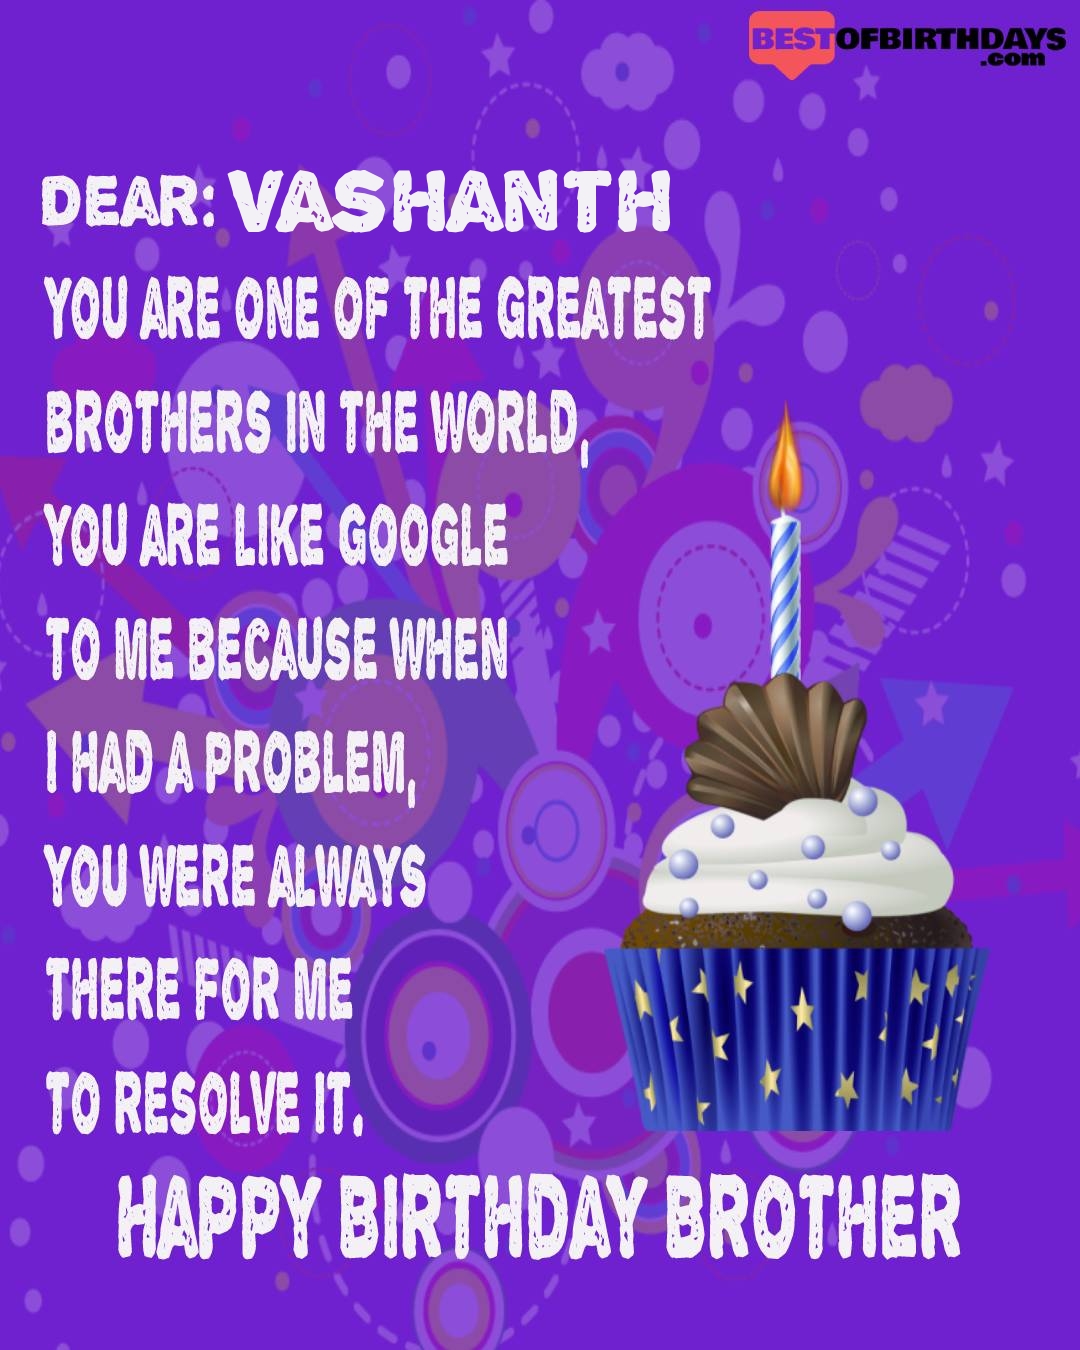 Happy birthday vashanth bhai brother bro